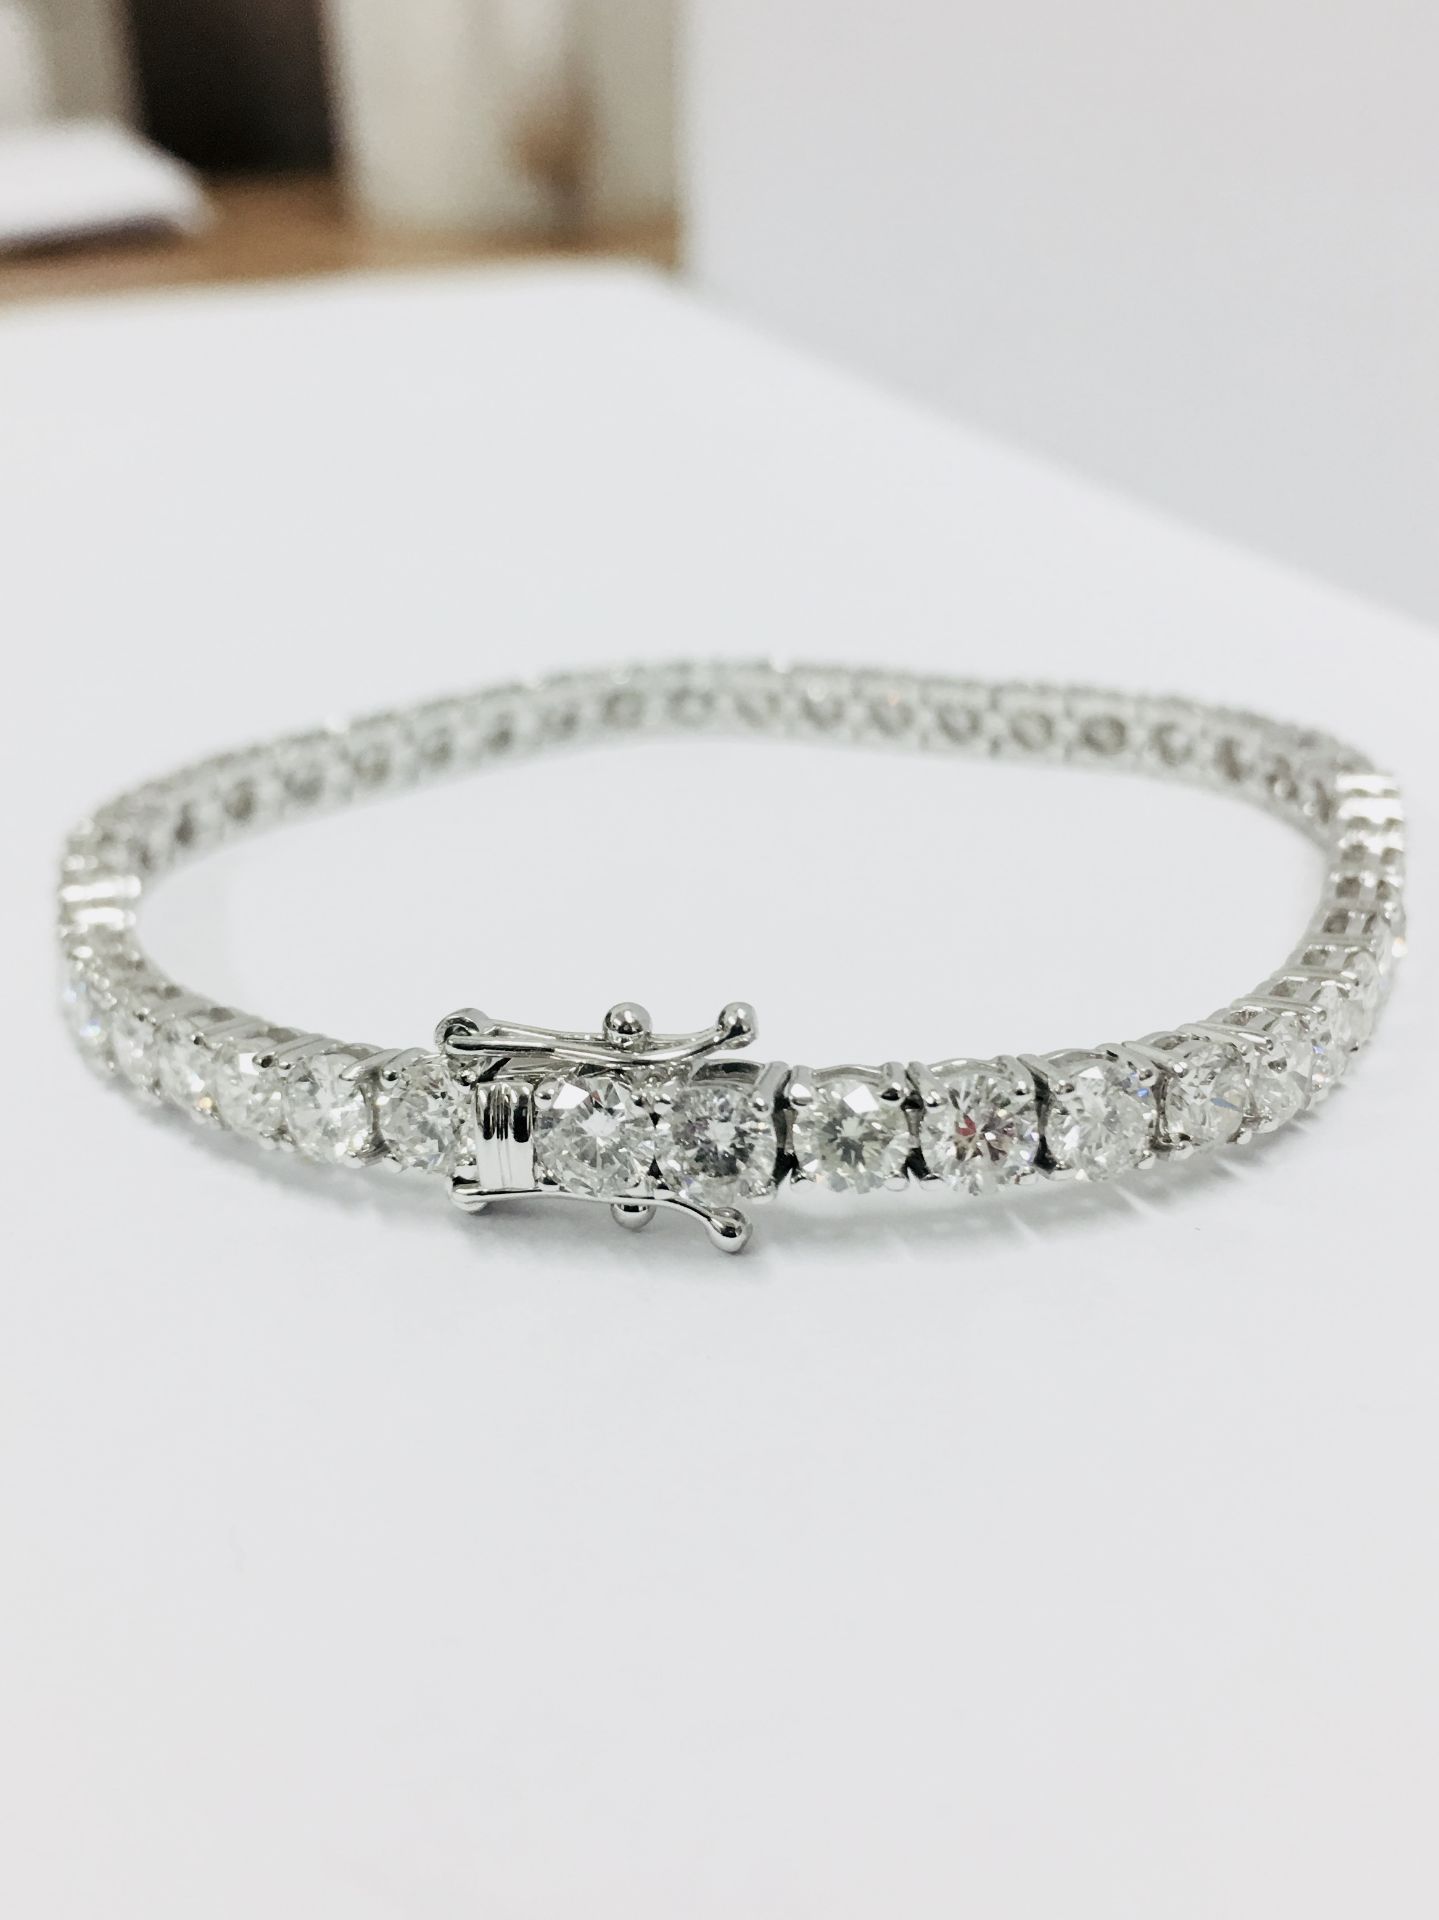 10ct diamond bracelet ,diamonds h colour si grade ,44x 3.75mm diamonds,11.75gms 18ct white gold 7Ó,